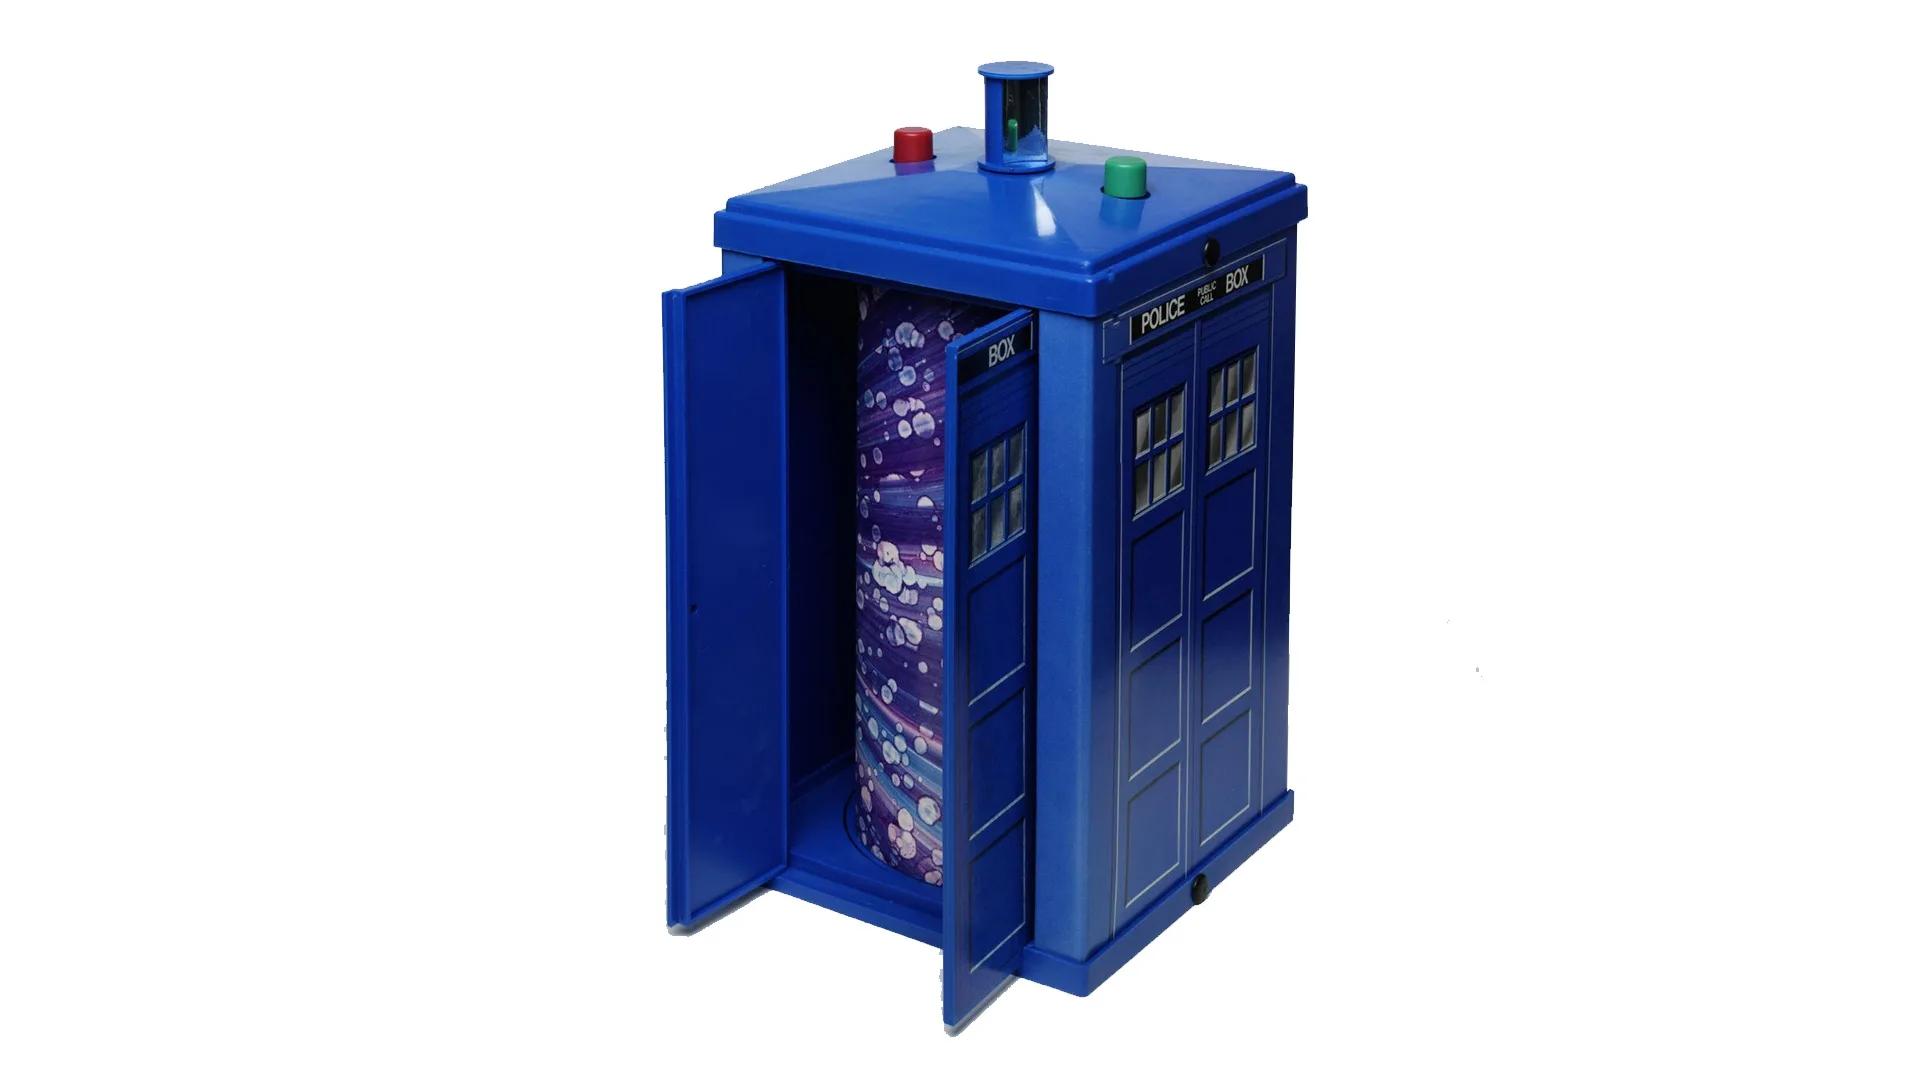 Blue policebox Tardis toy on white background